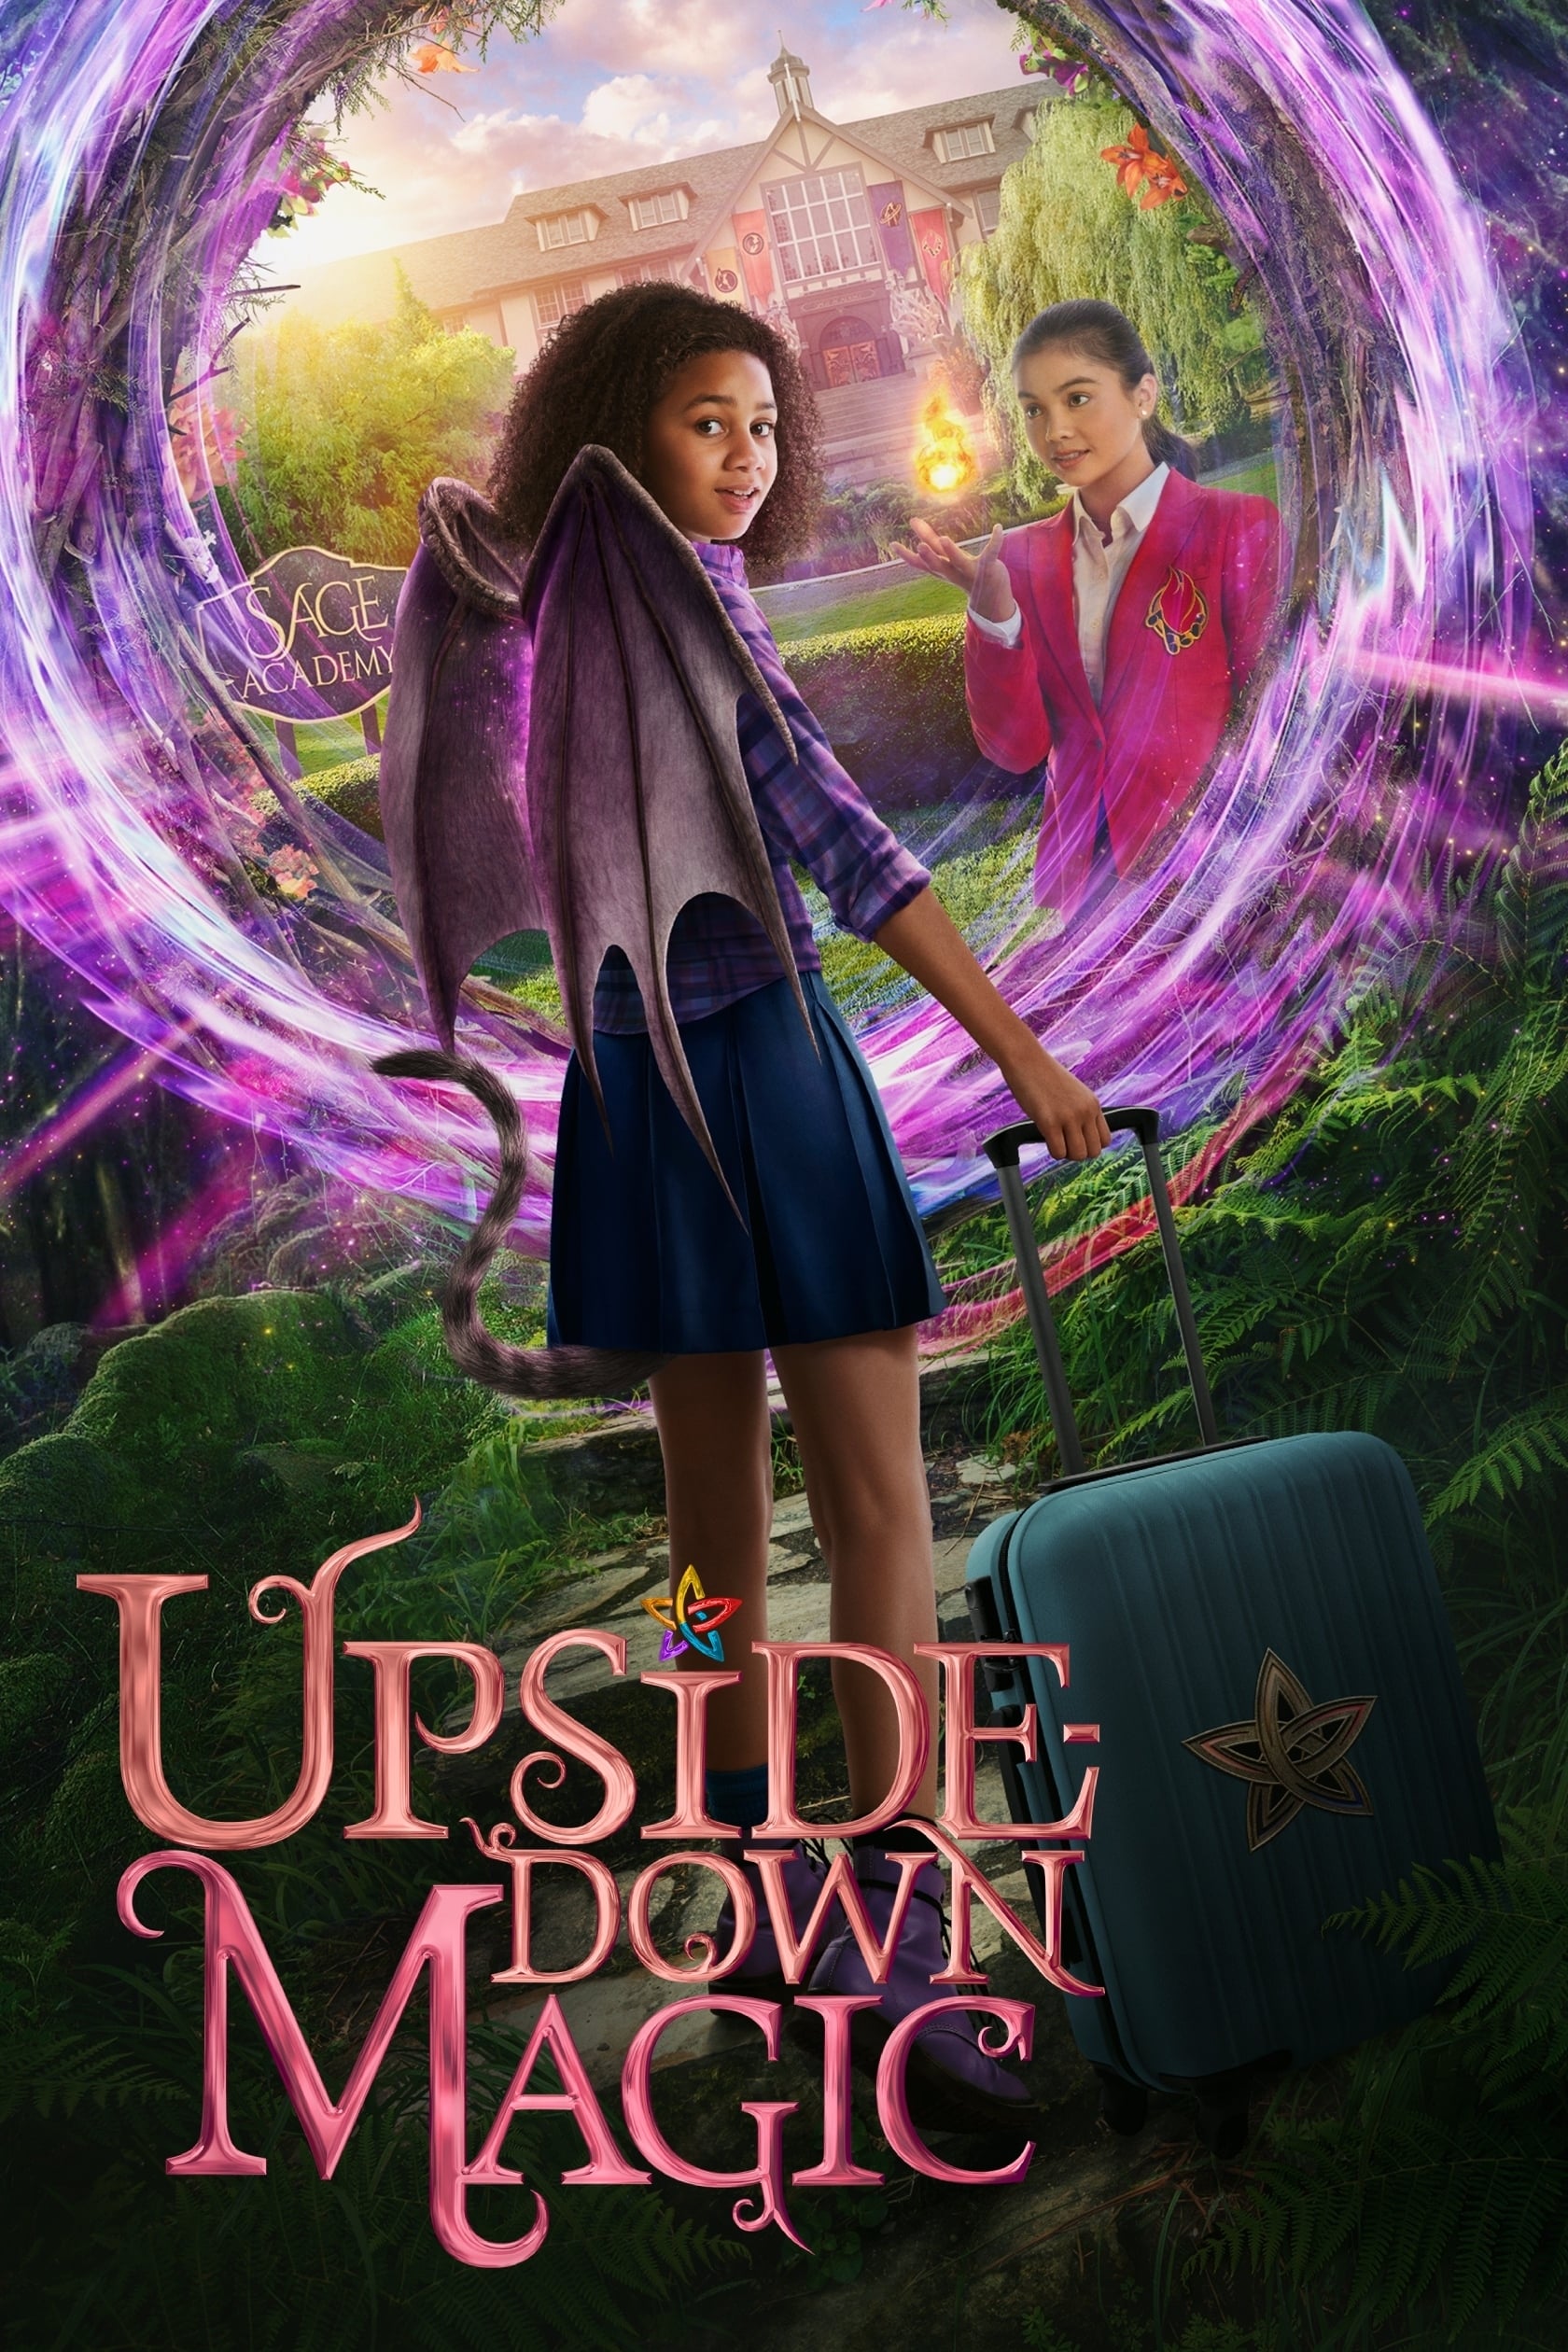 Upside-Down Magic - Upside-Down Magic (2020)